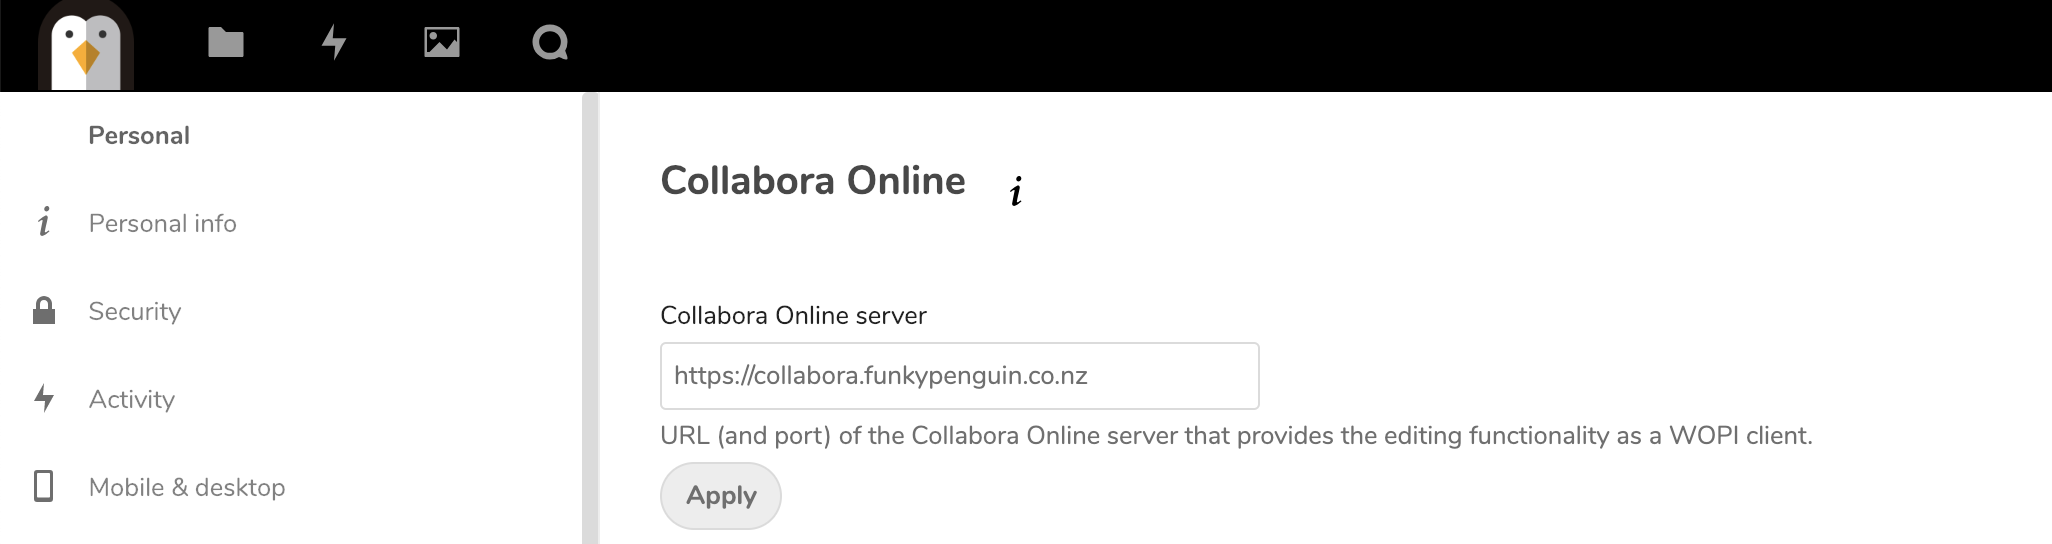 collabora online server nextcloud